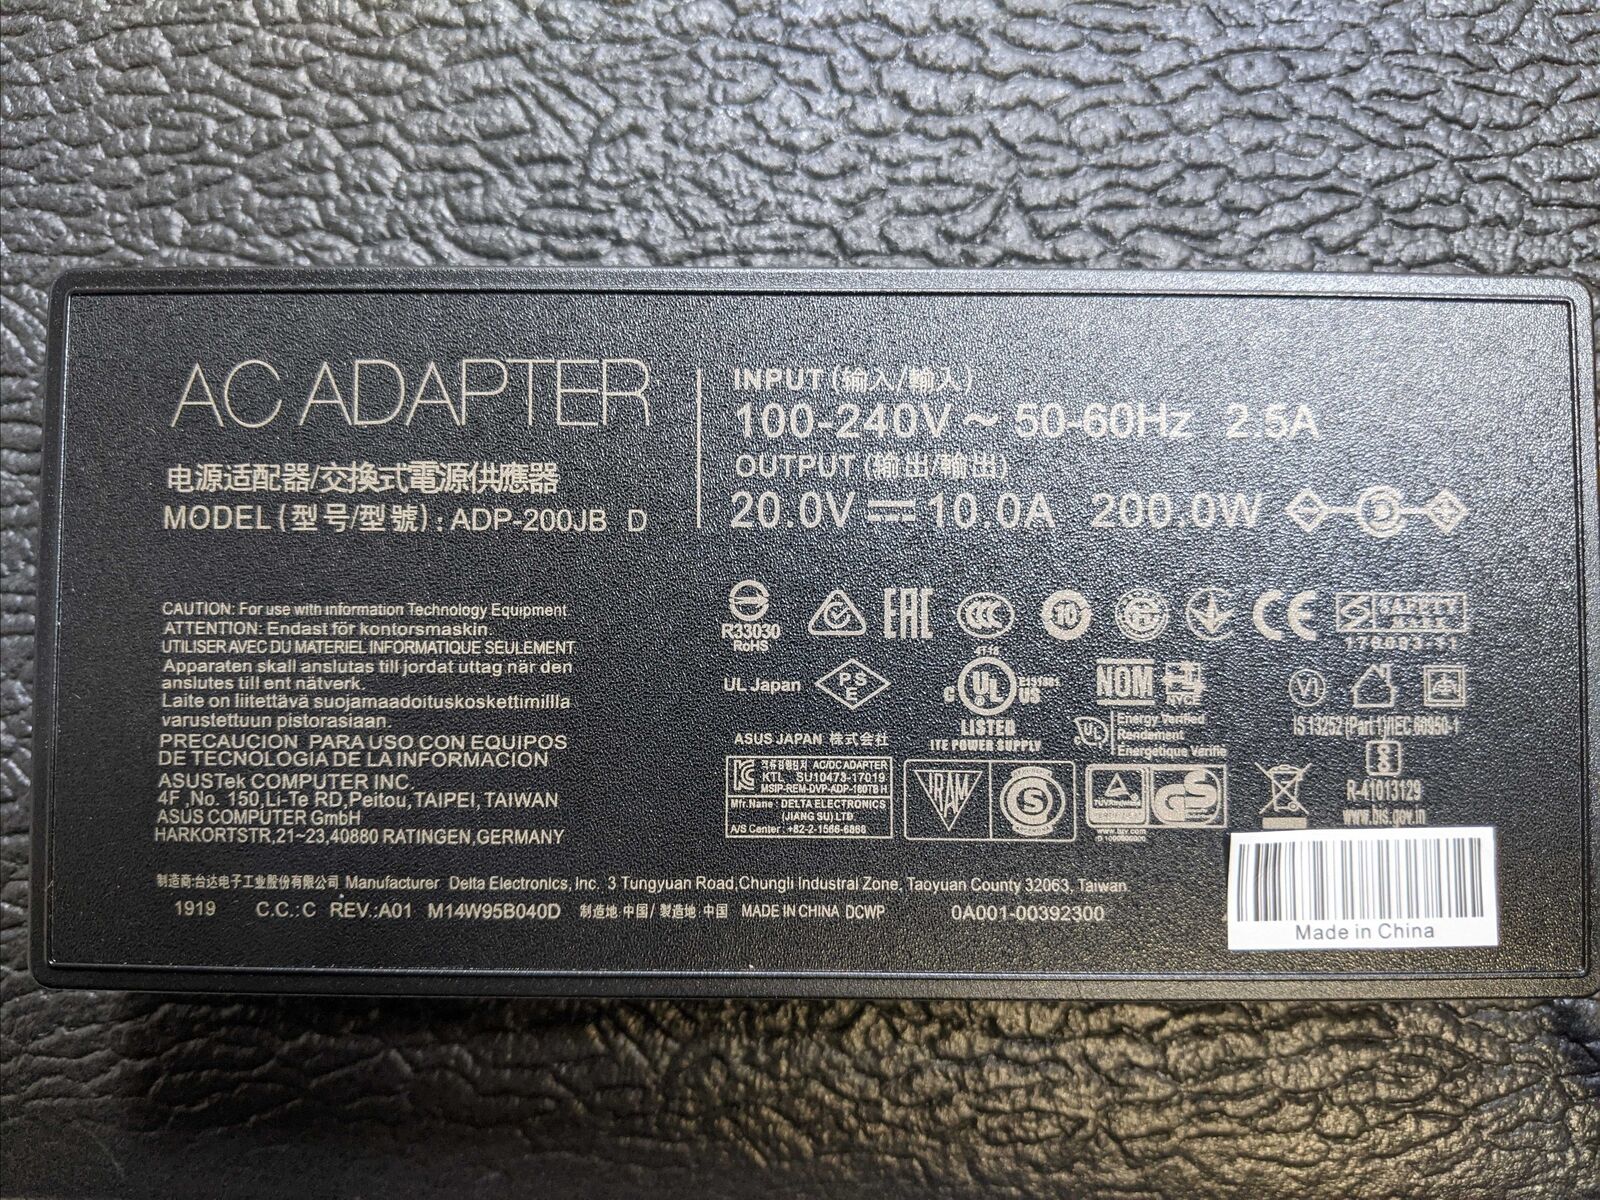 New Original OEM Genuine Asus ADP-200JB D 200W 20V 10A AC Adapter Charger MPN: ADP-200JB D Brand: ASUS UPC: Does